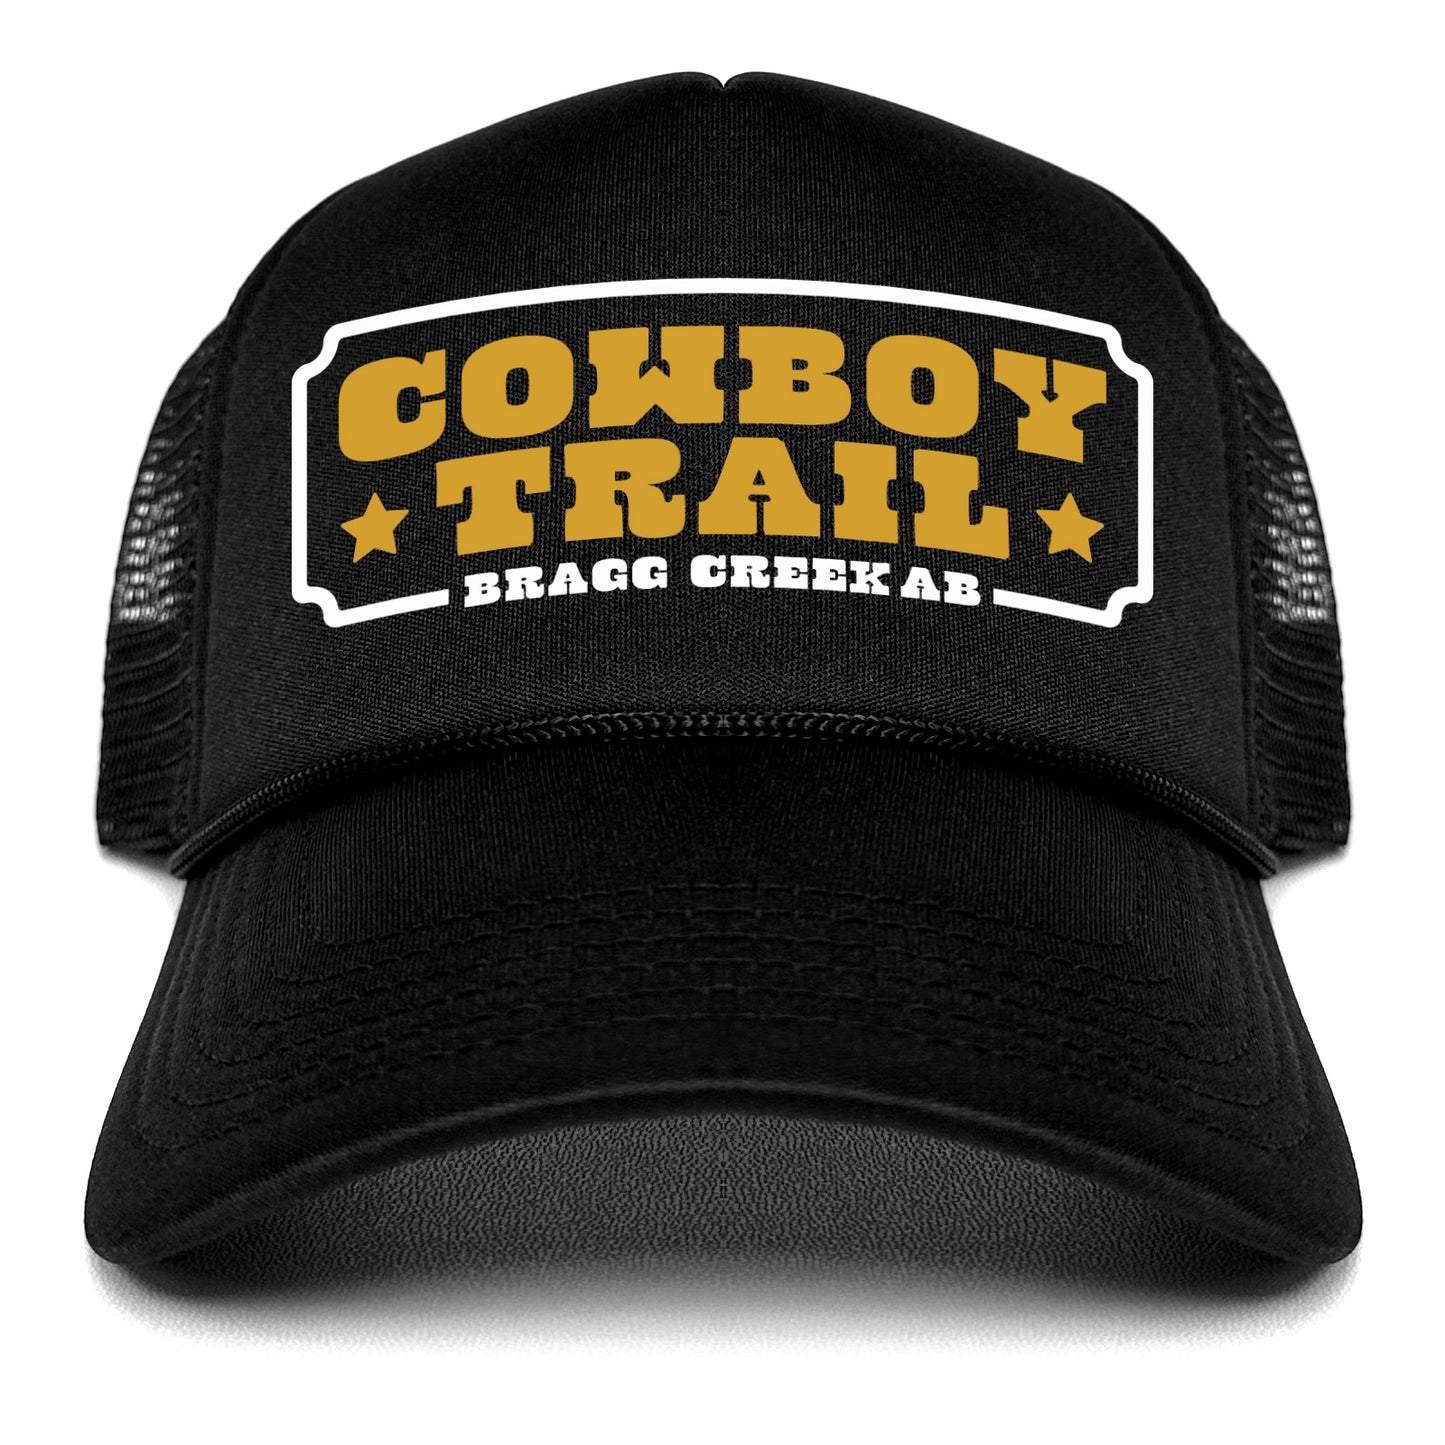 Cowboy Trail Hat Black